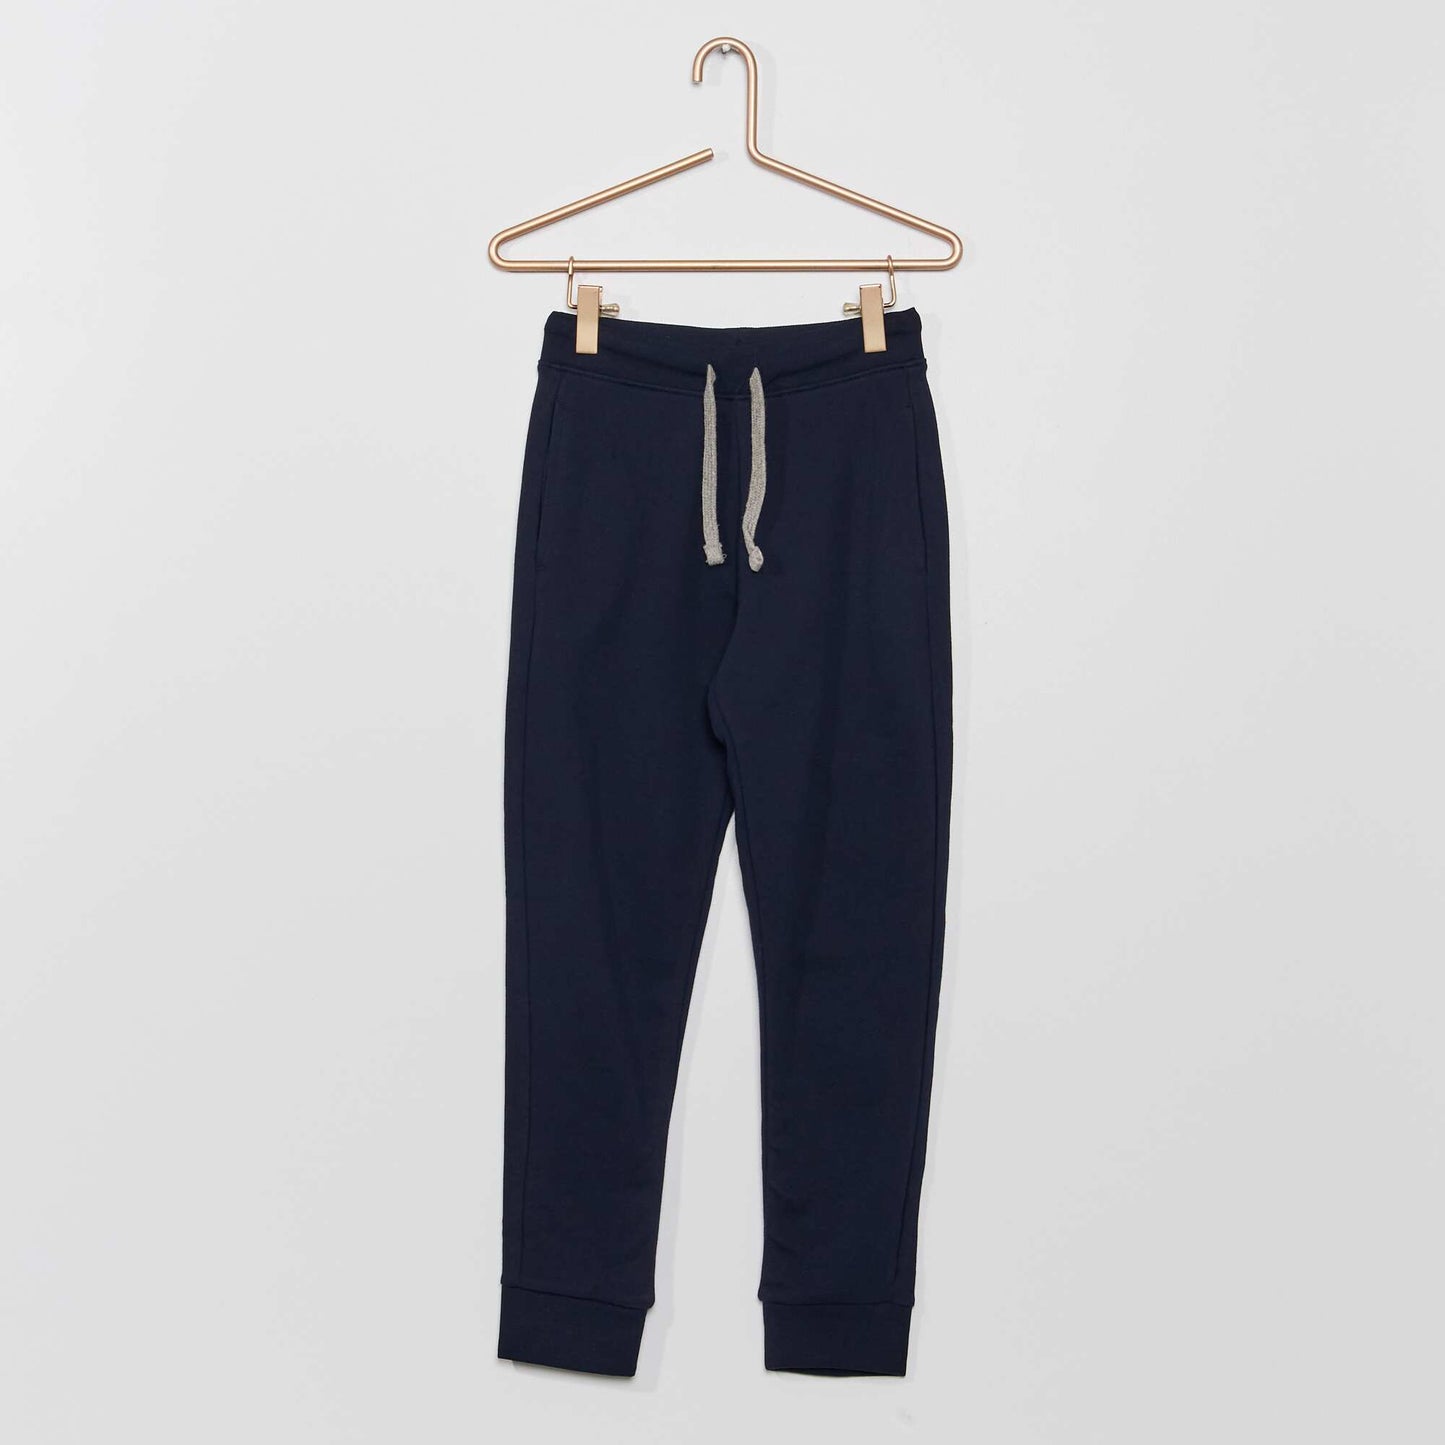 Pantalon de jogging en coton uni - Mixte bleu marine